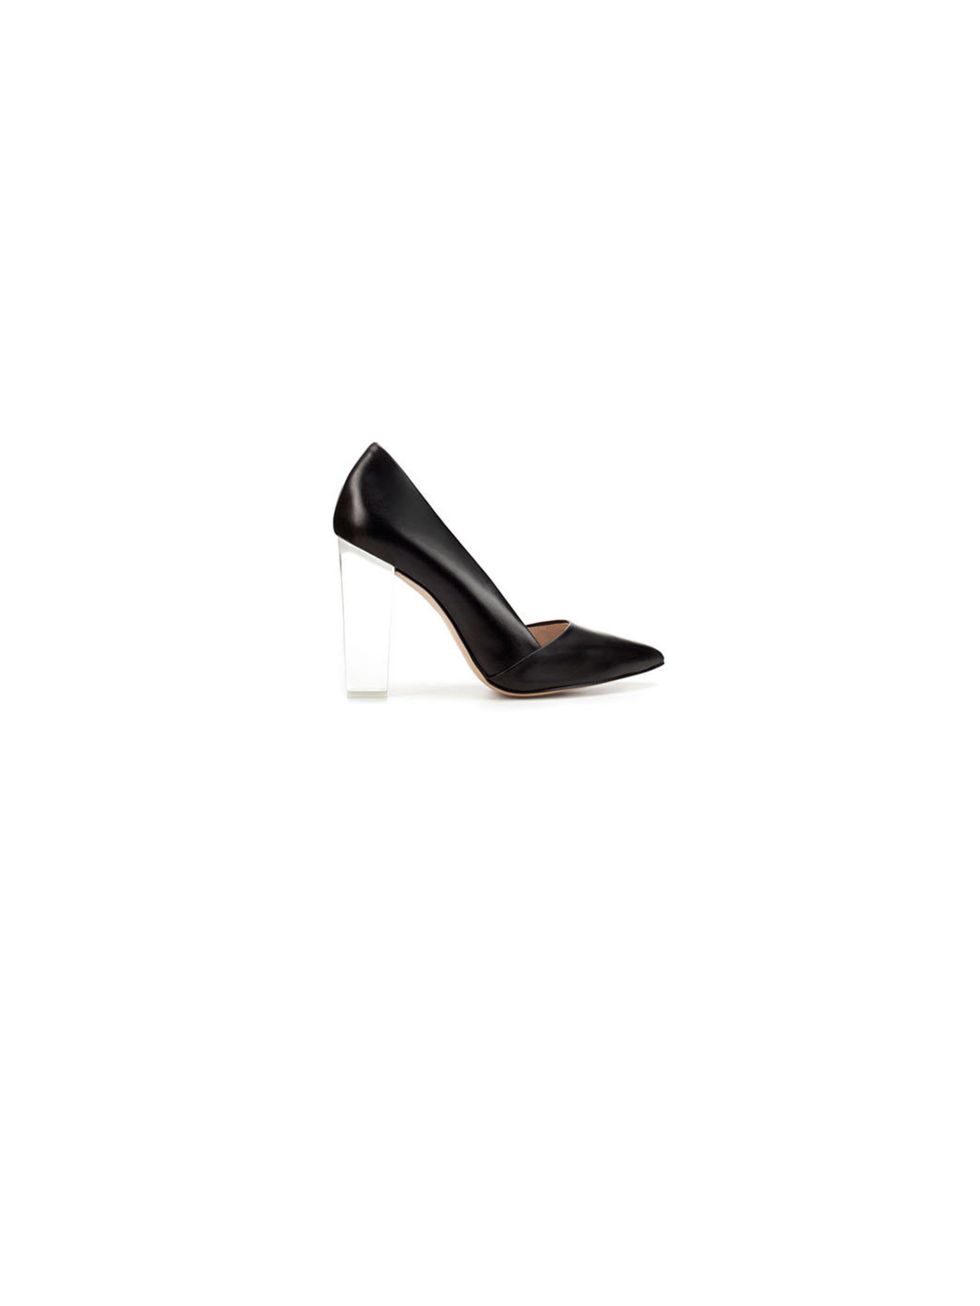 <p><a href="http://www.zara.com/webapp/wcs/stores/servlet/product/uk/en/zara-W2011-r/163405/677521/COURT%2BSHOE%2BWITH%2BMETHACRYLATE%2BHEEL">Zara</a> court shoe with methacrylate heel, £79.99</p>